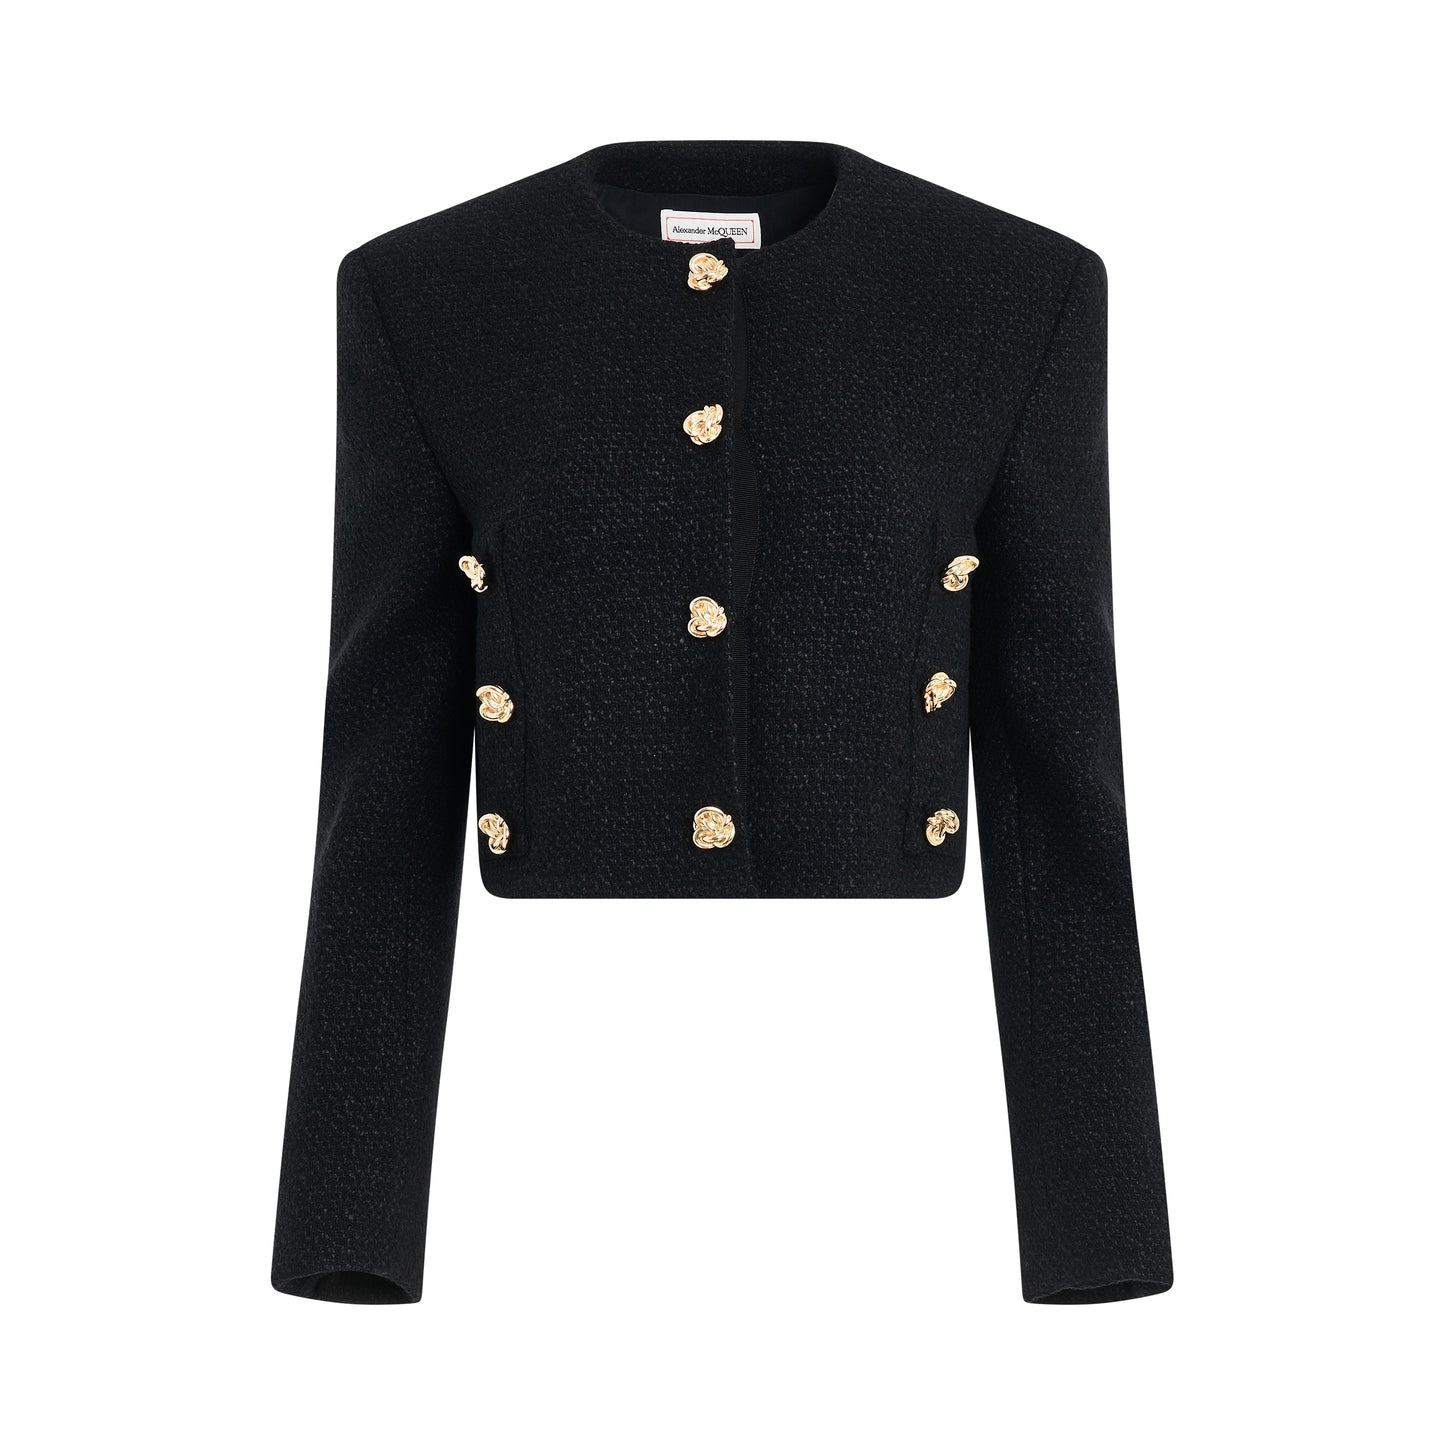 Boxy Tweed Jacket in Black